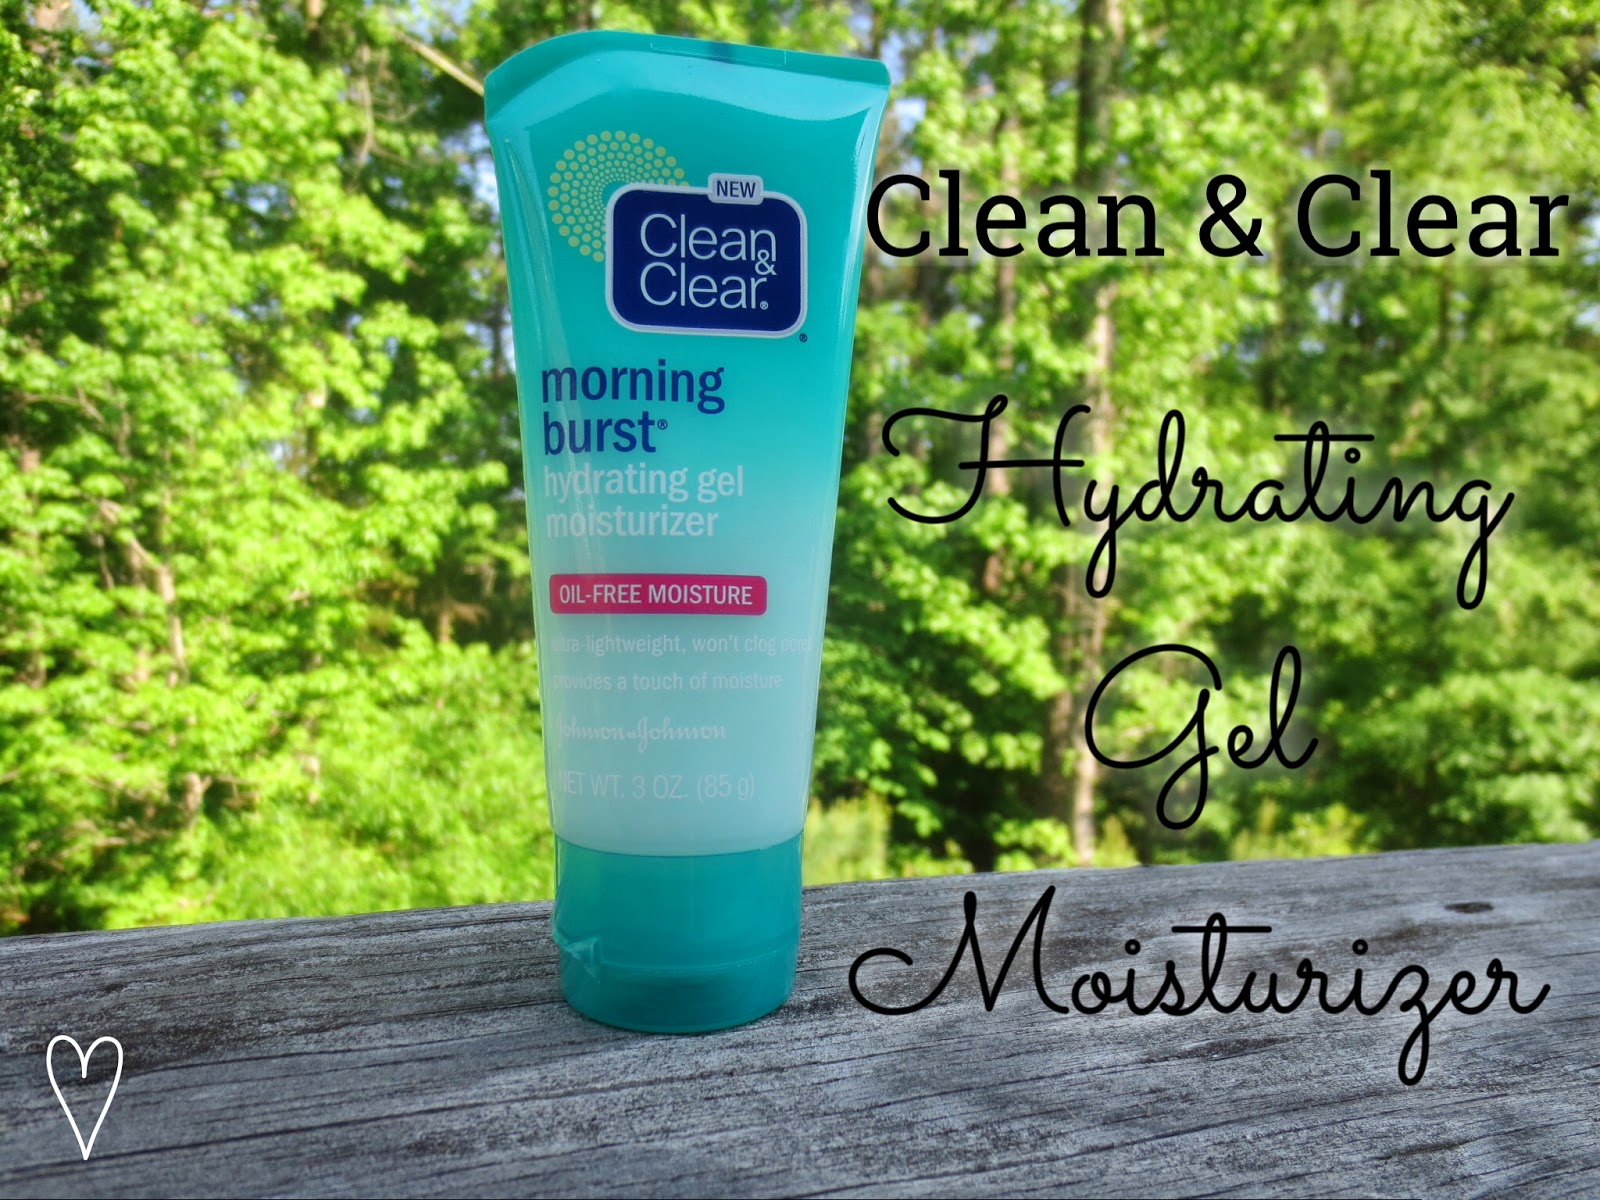 Kem dưỡng cấp nước Clean & Clear Morning Burst Hydrating Gel Moisturizer, Oil-Free 85g